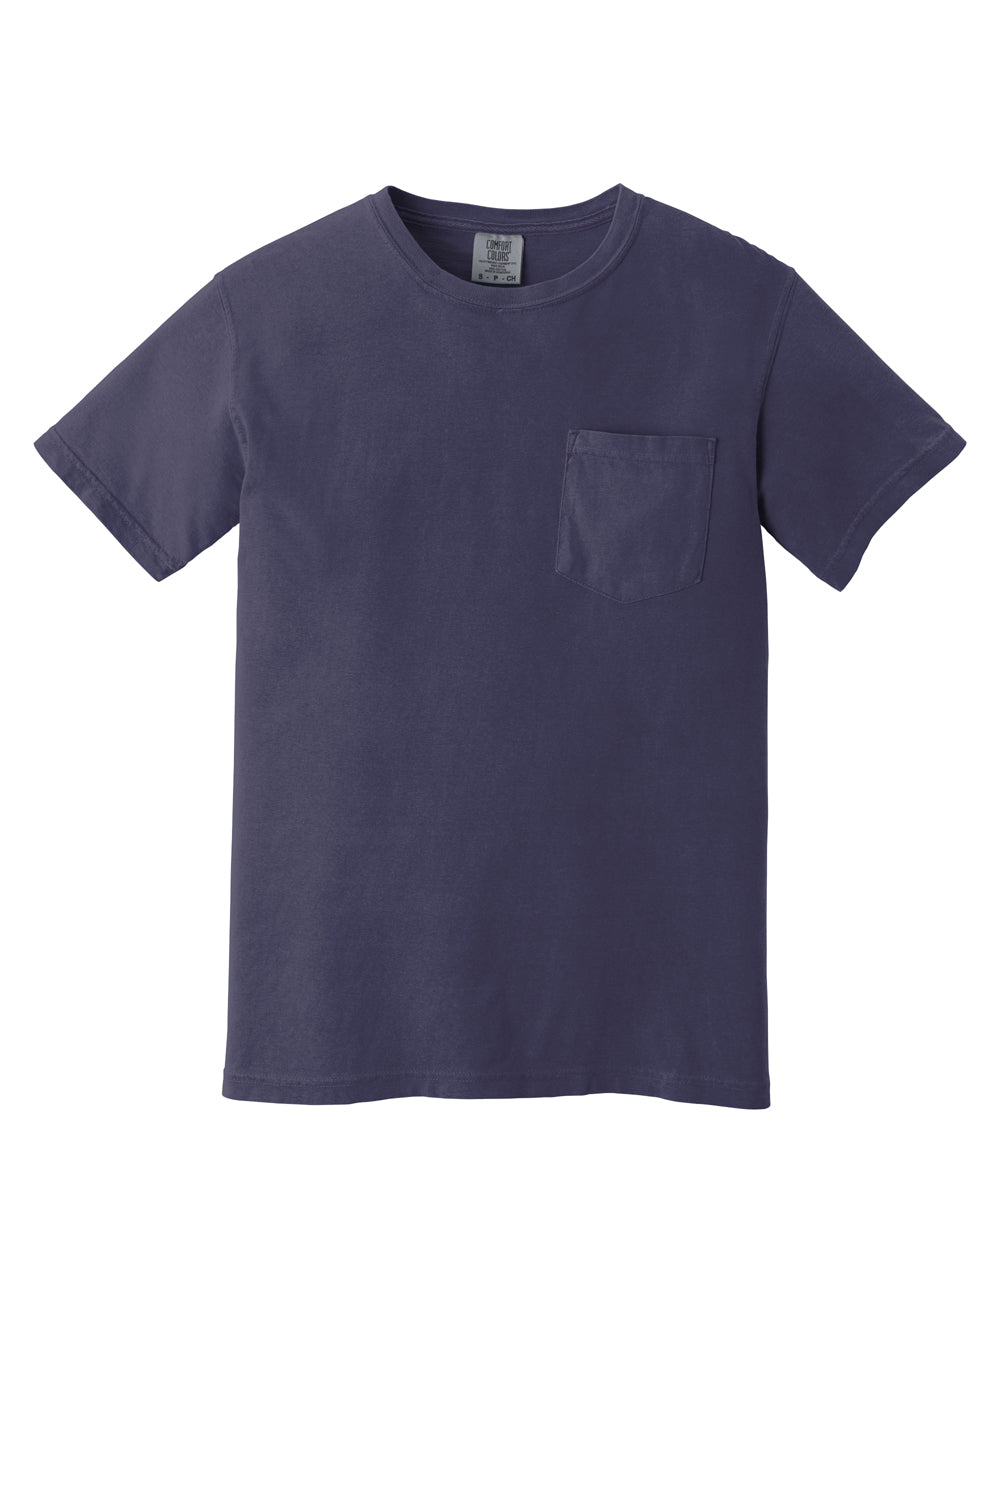 Comfort Colors Mens Short Sleeve Crewneck T-Shirt w/ Pocket Grape Purple Flat Front